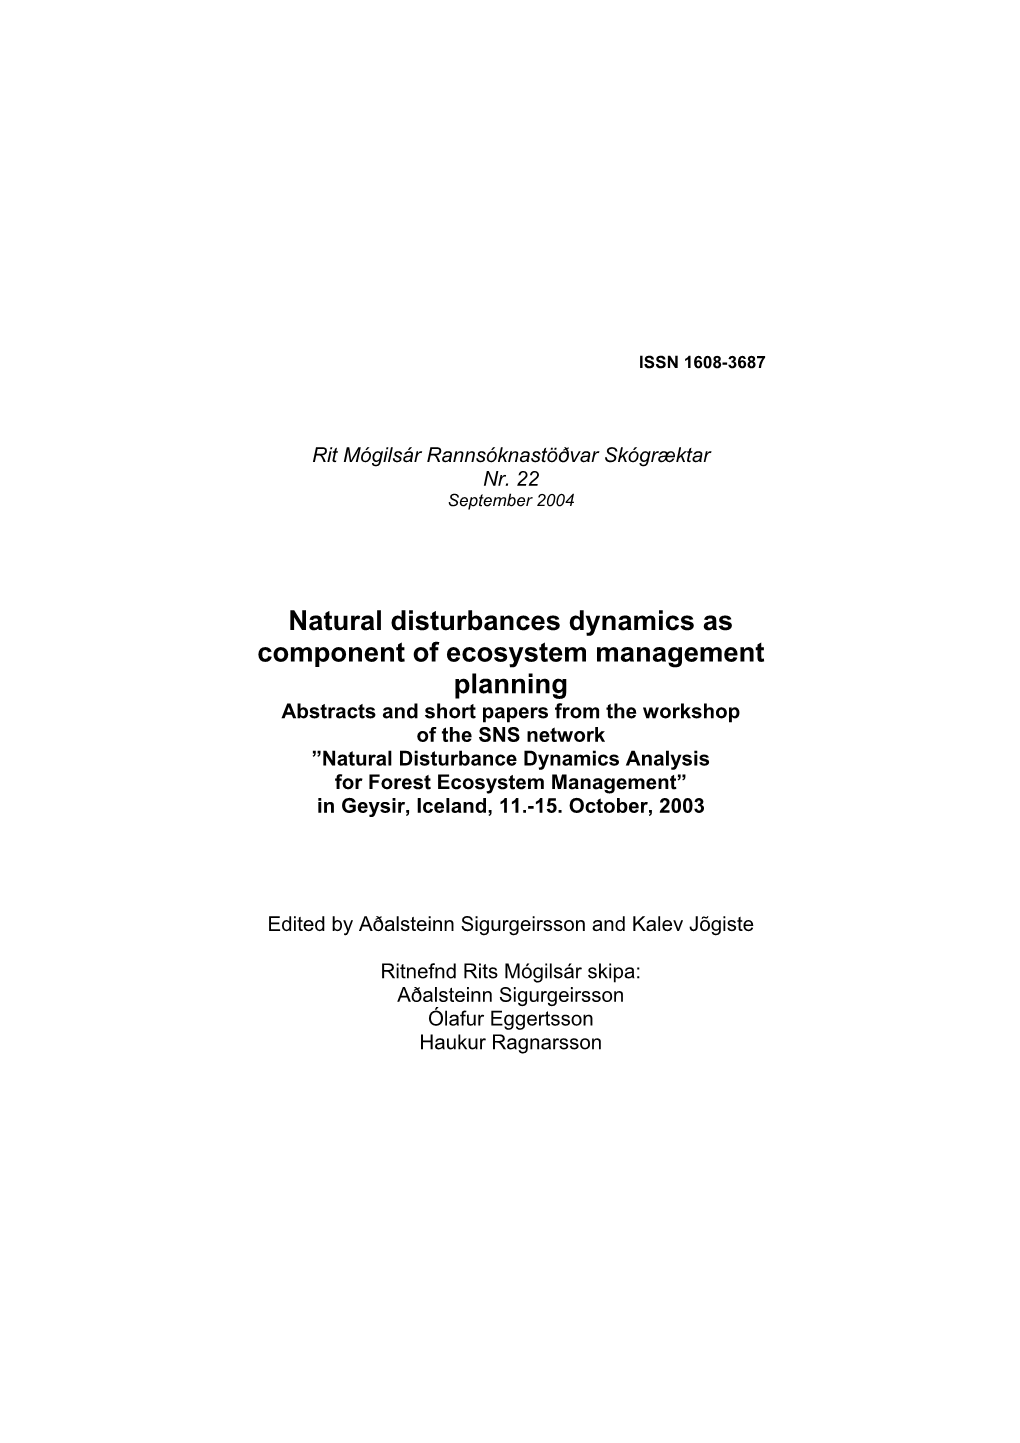 Natural Disturbances Dynamics As Component of Ecosystem